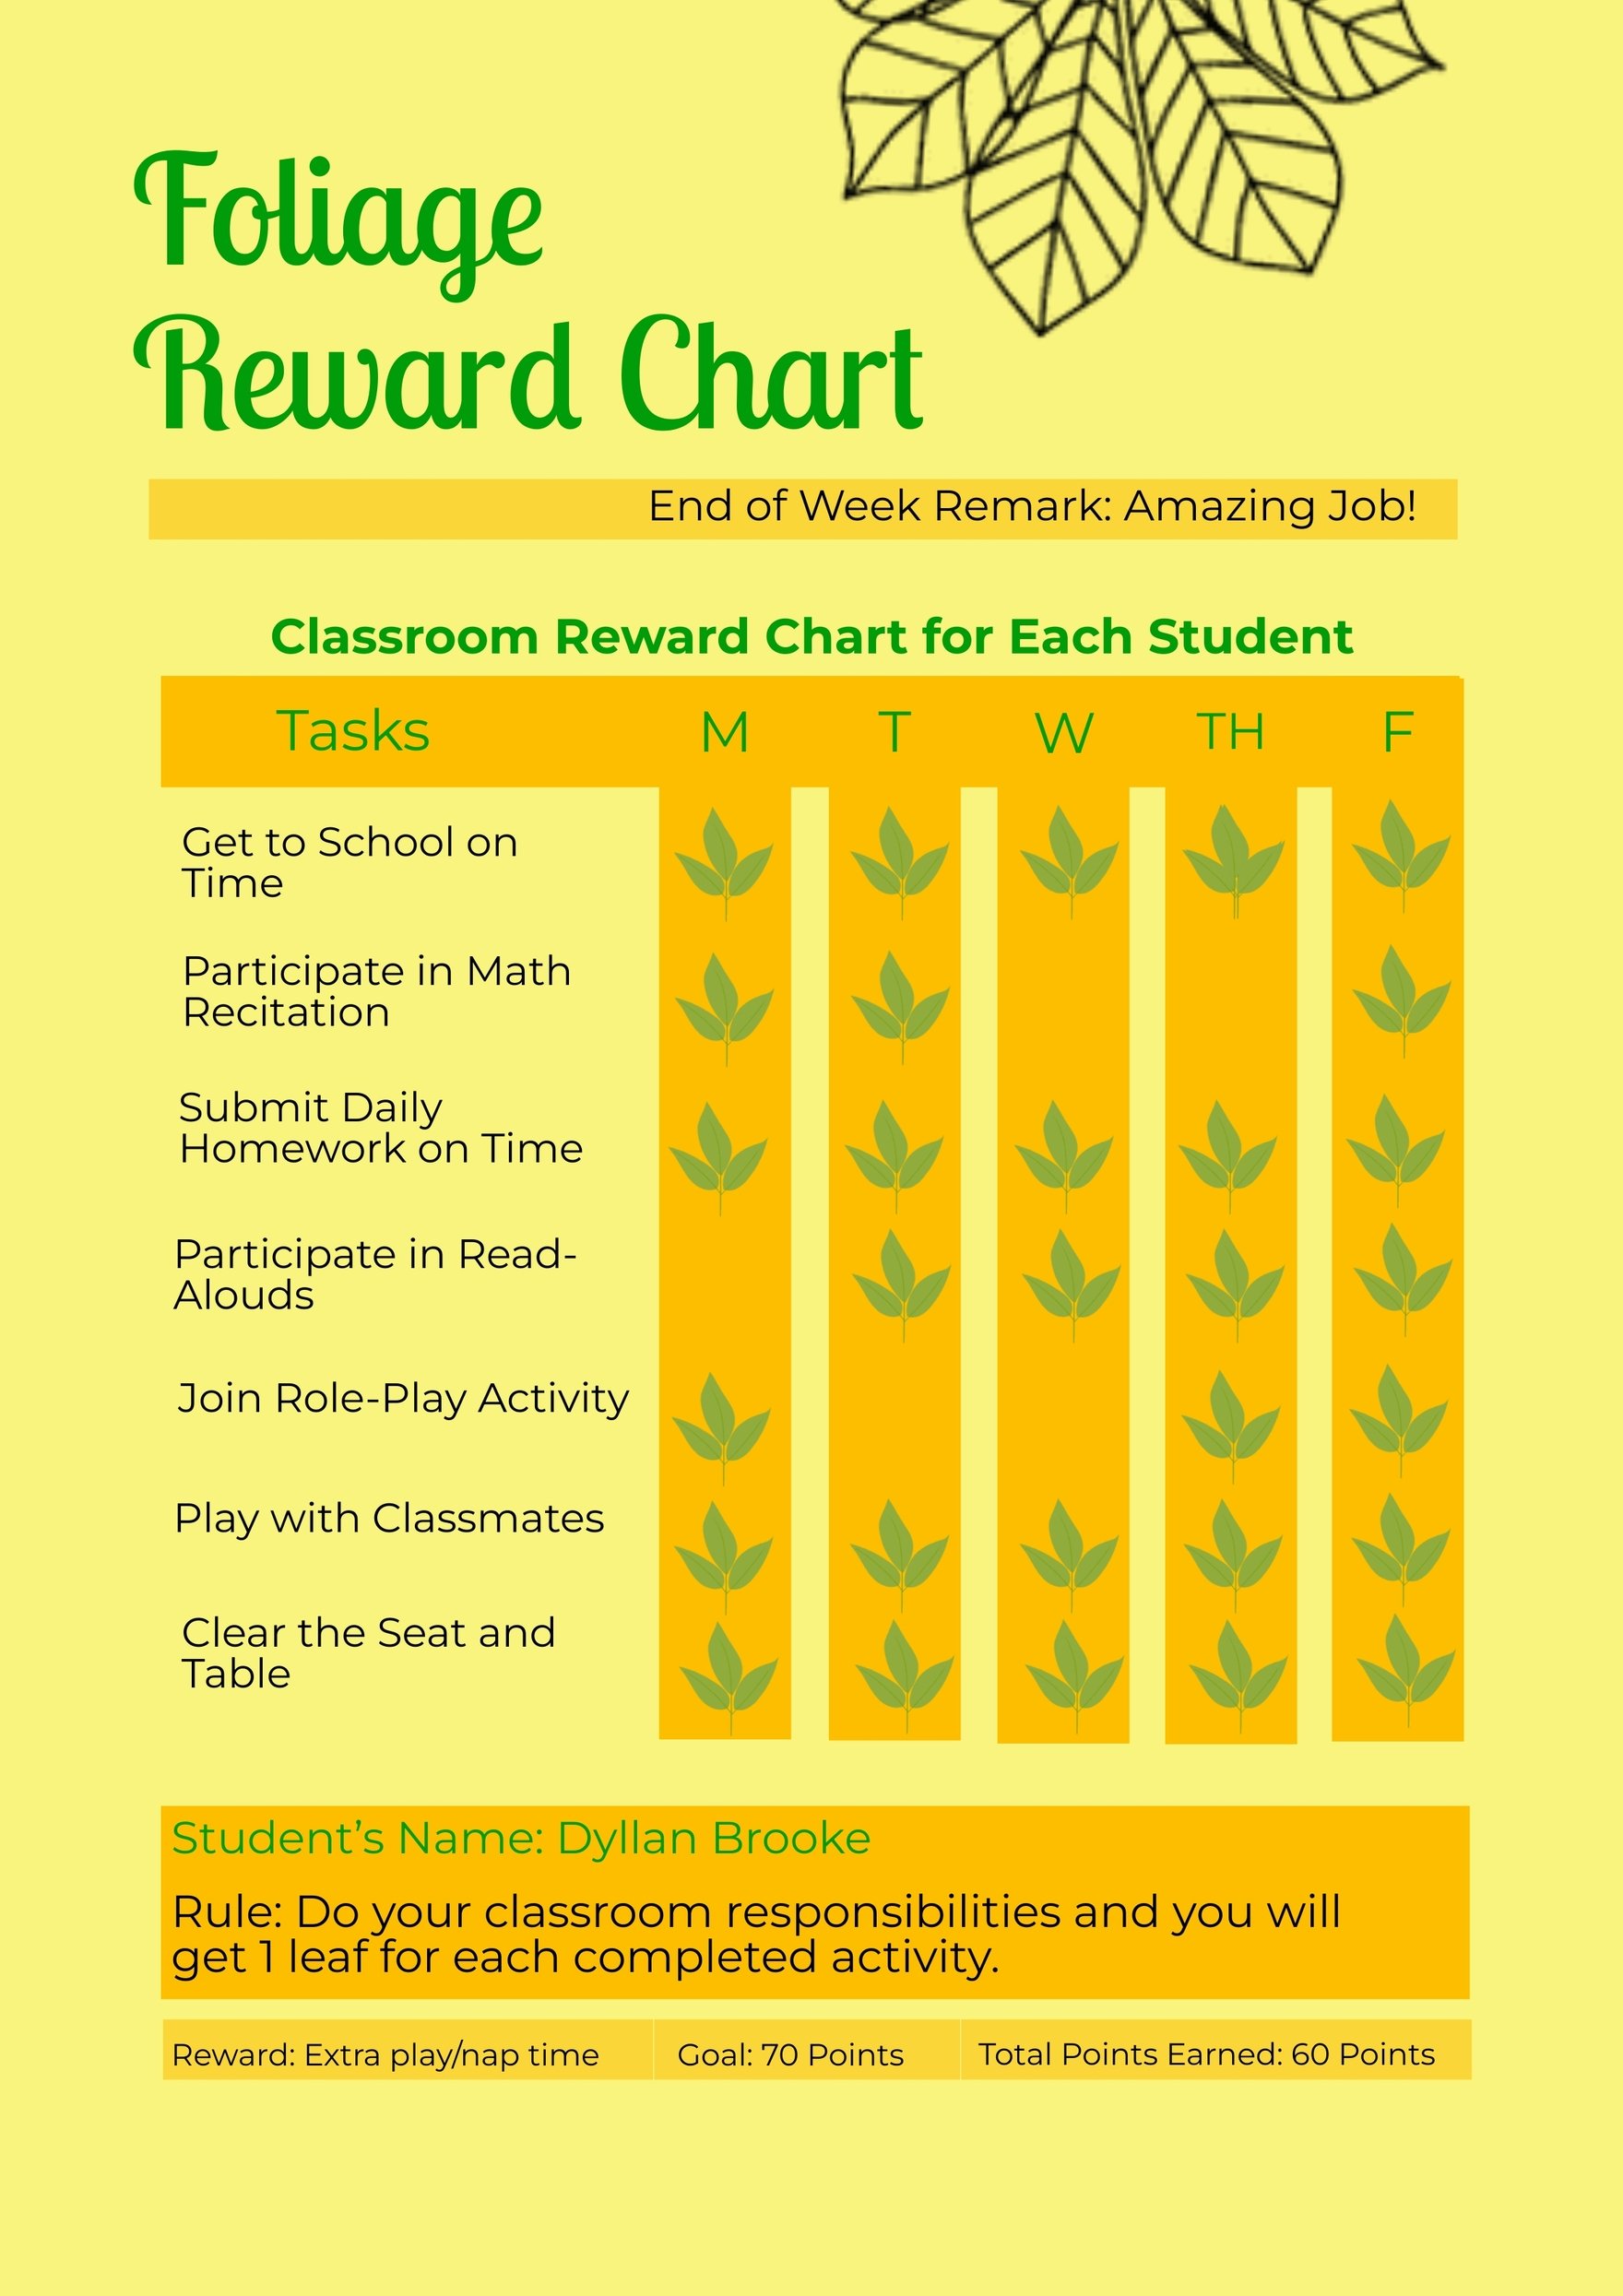 Free Foliage Reward Chart in PDF, Illustrator